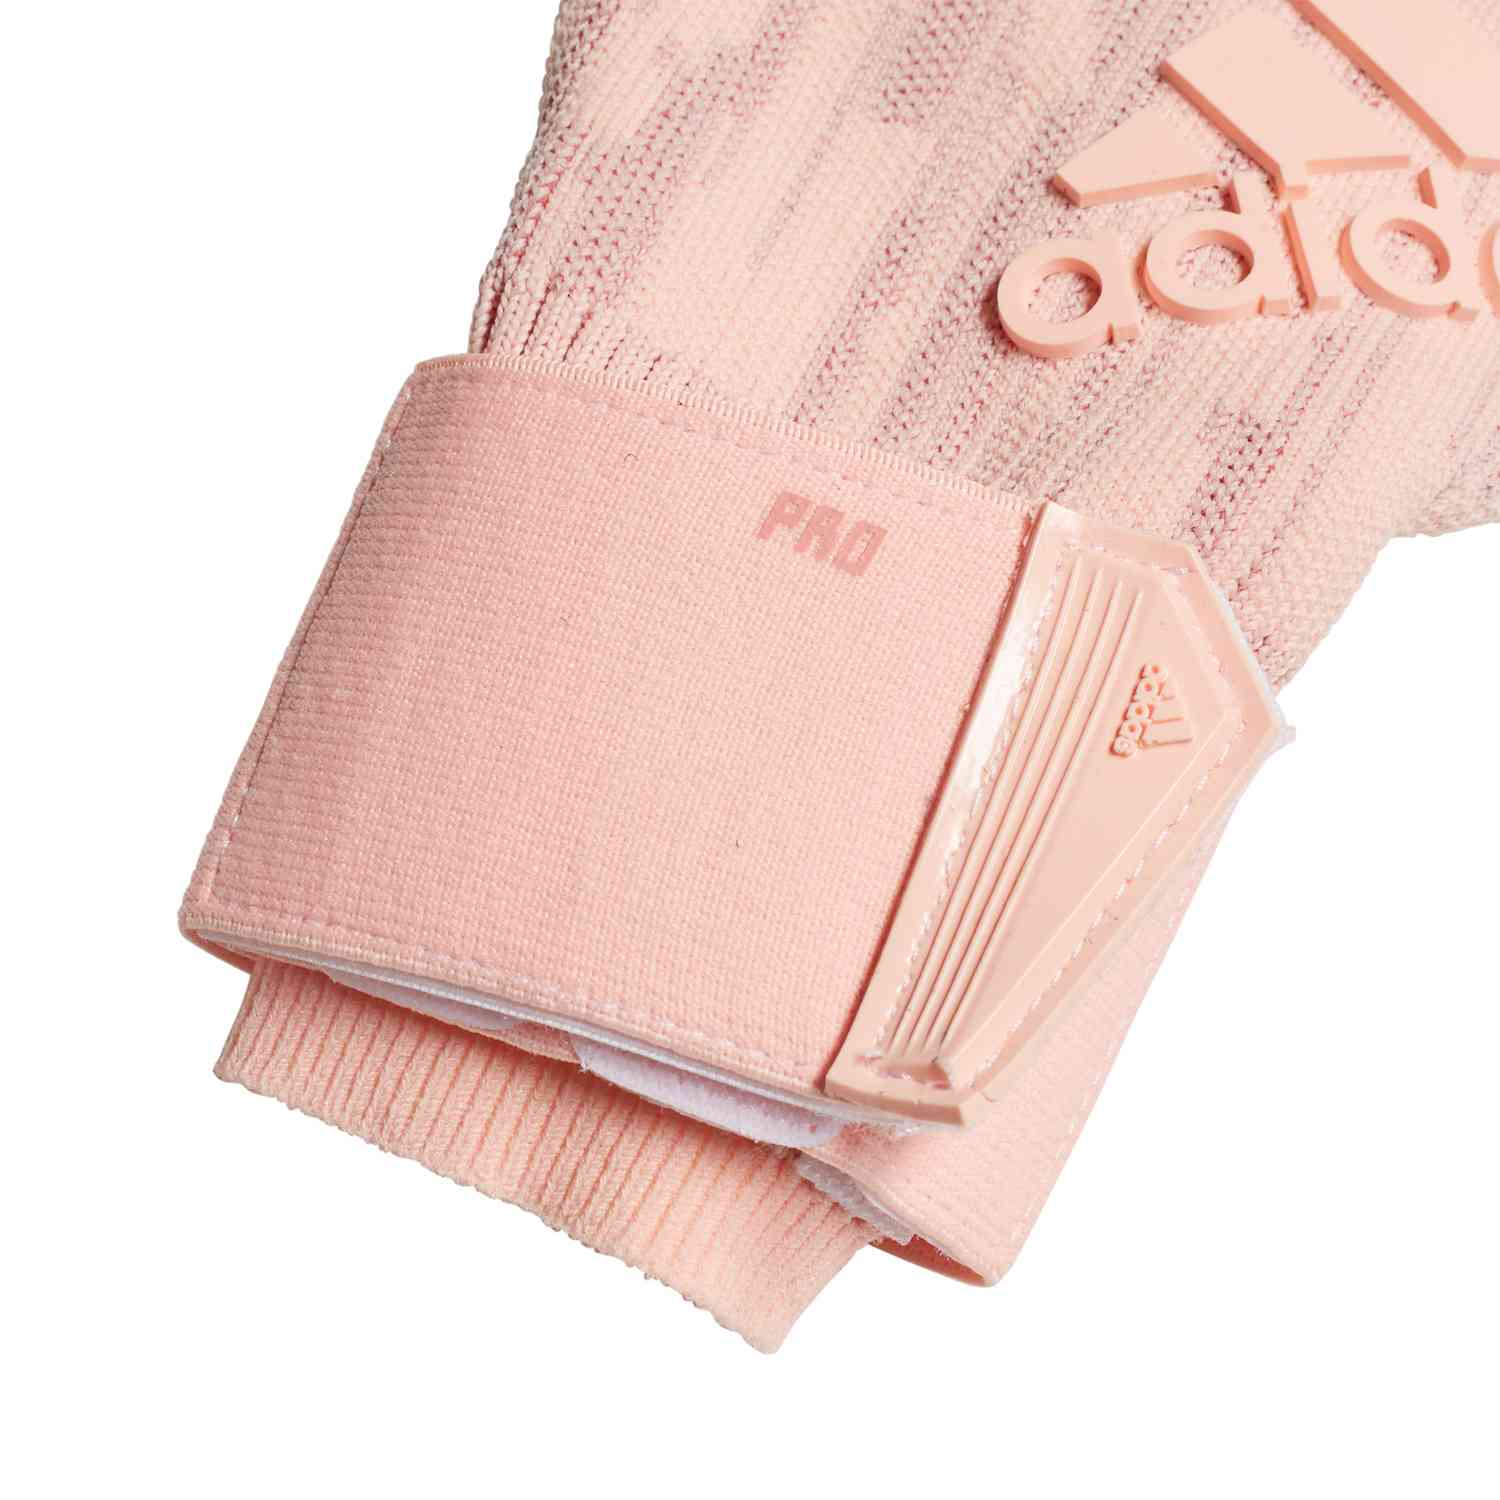 adidas predator pink goalkeeper gloves